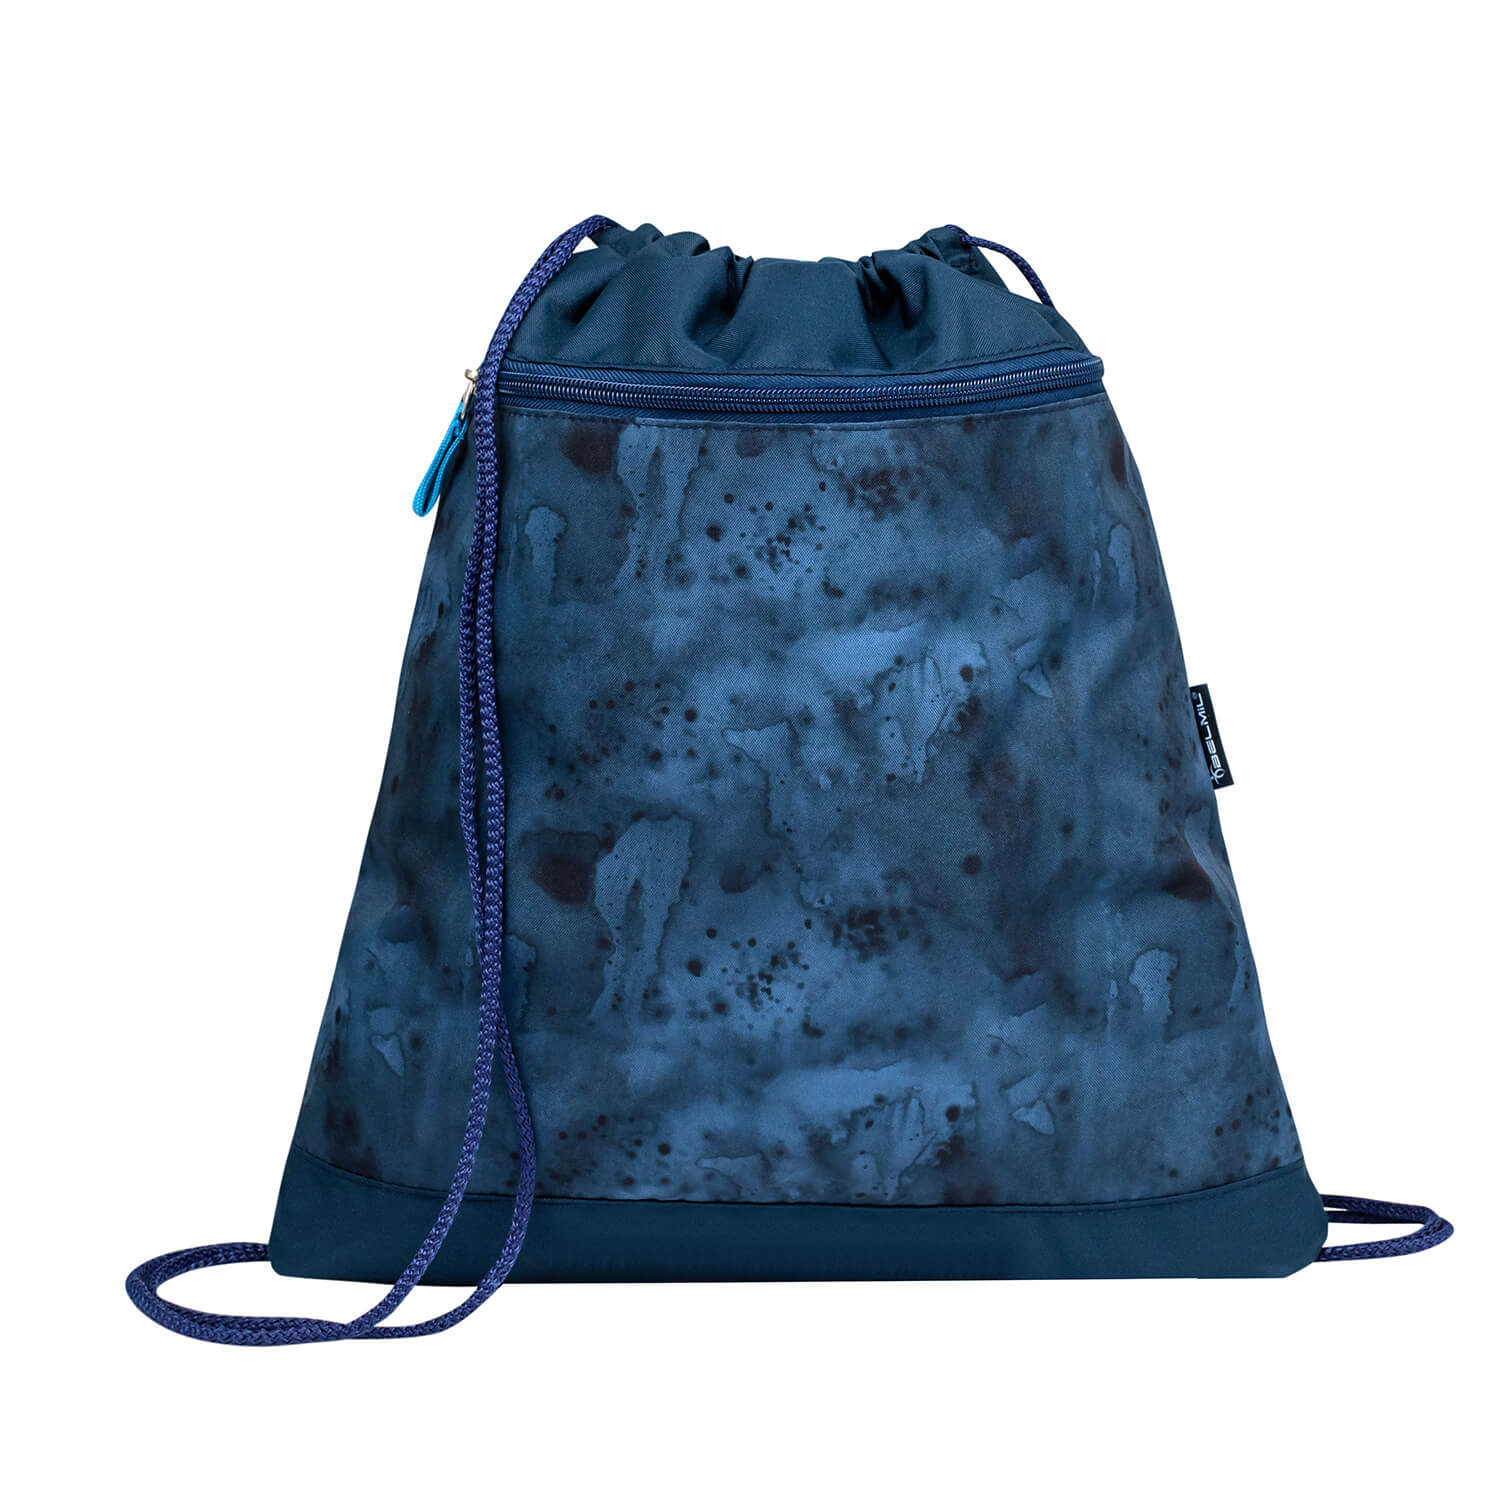 Motion Blue Splash schoolbag set 5 pcs